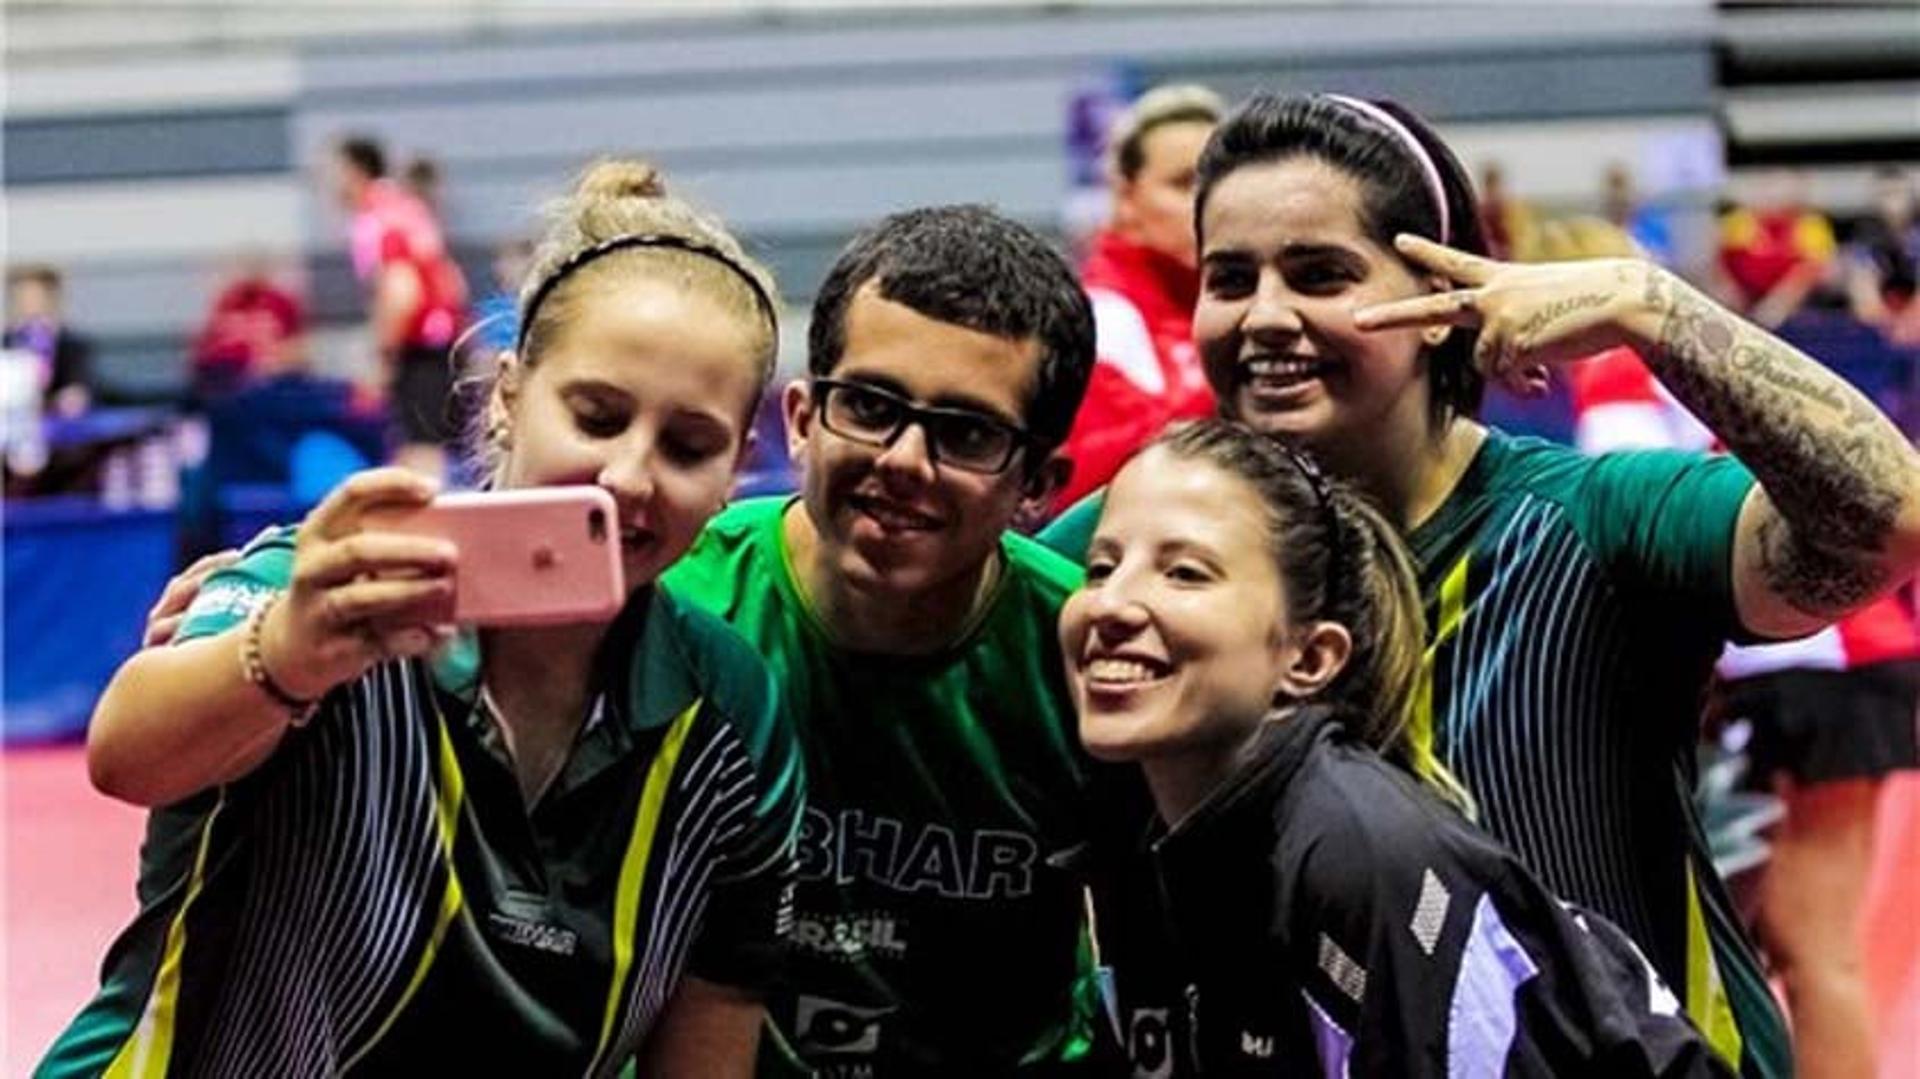 equipe brasileira feminina tênis de mesa